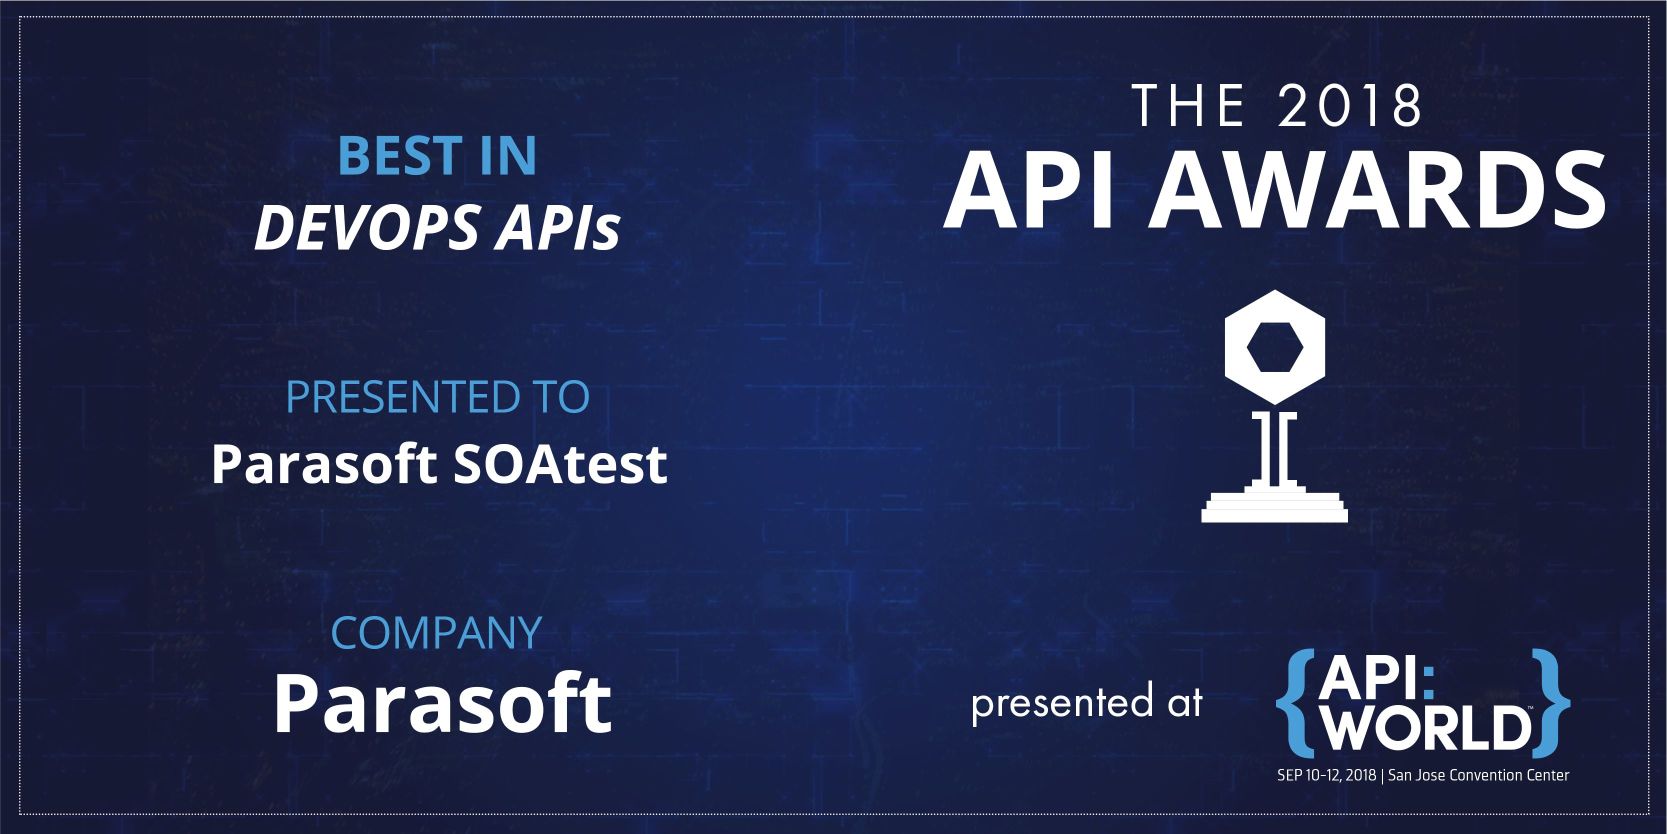 Parasoft SOAtest mit 2018 API Award ausgezeichnet